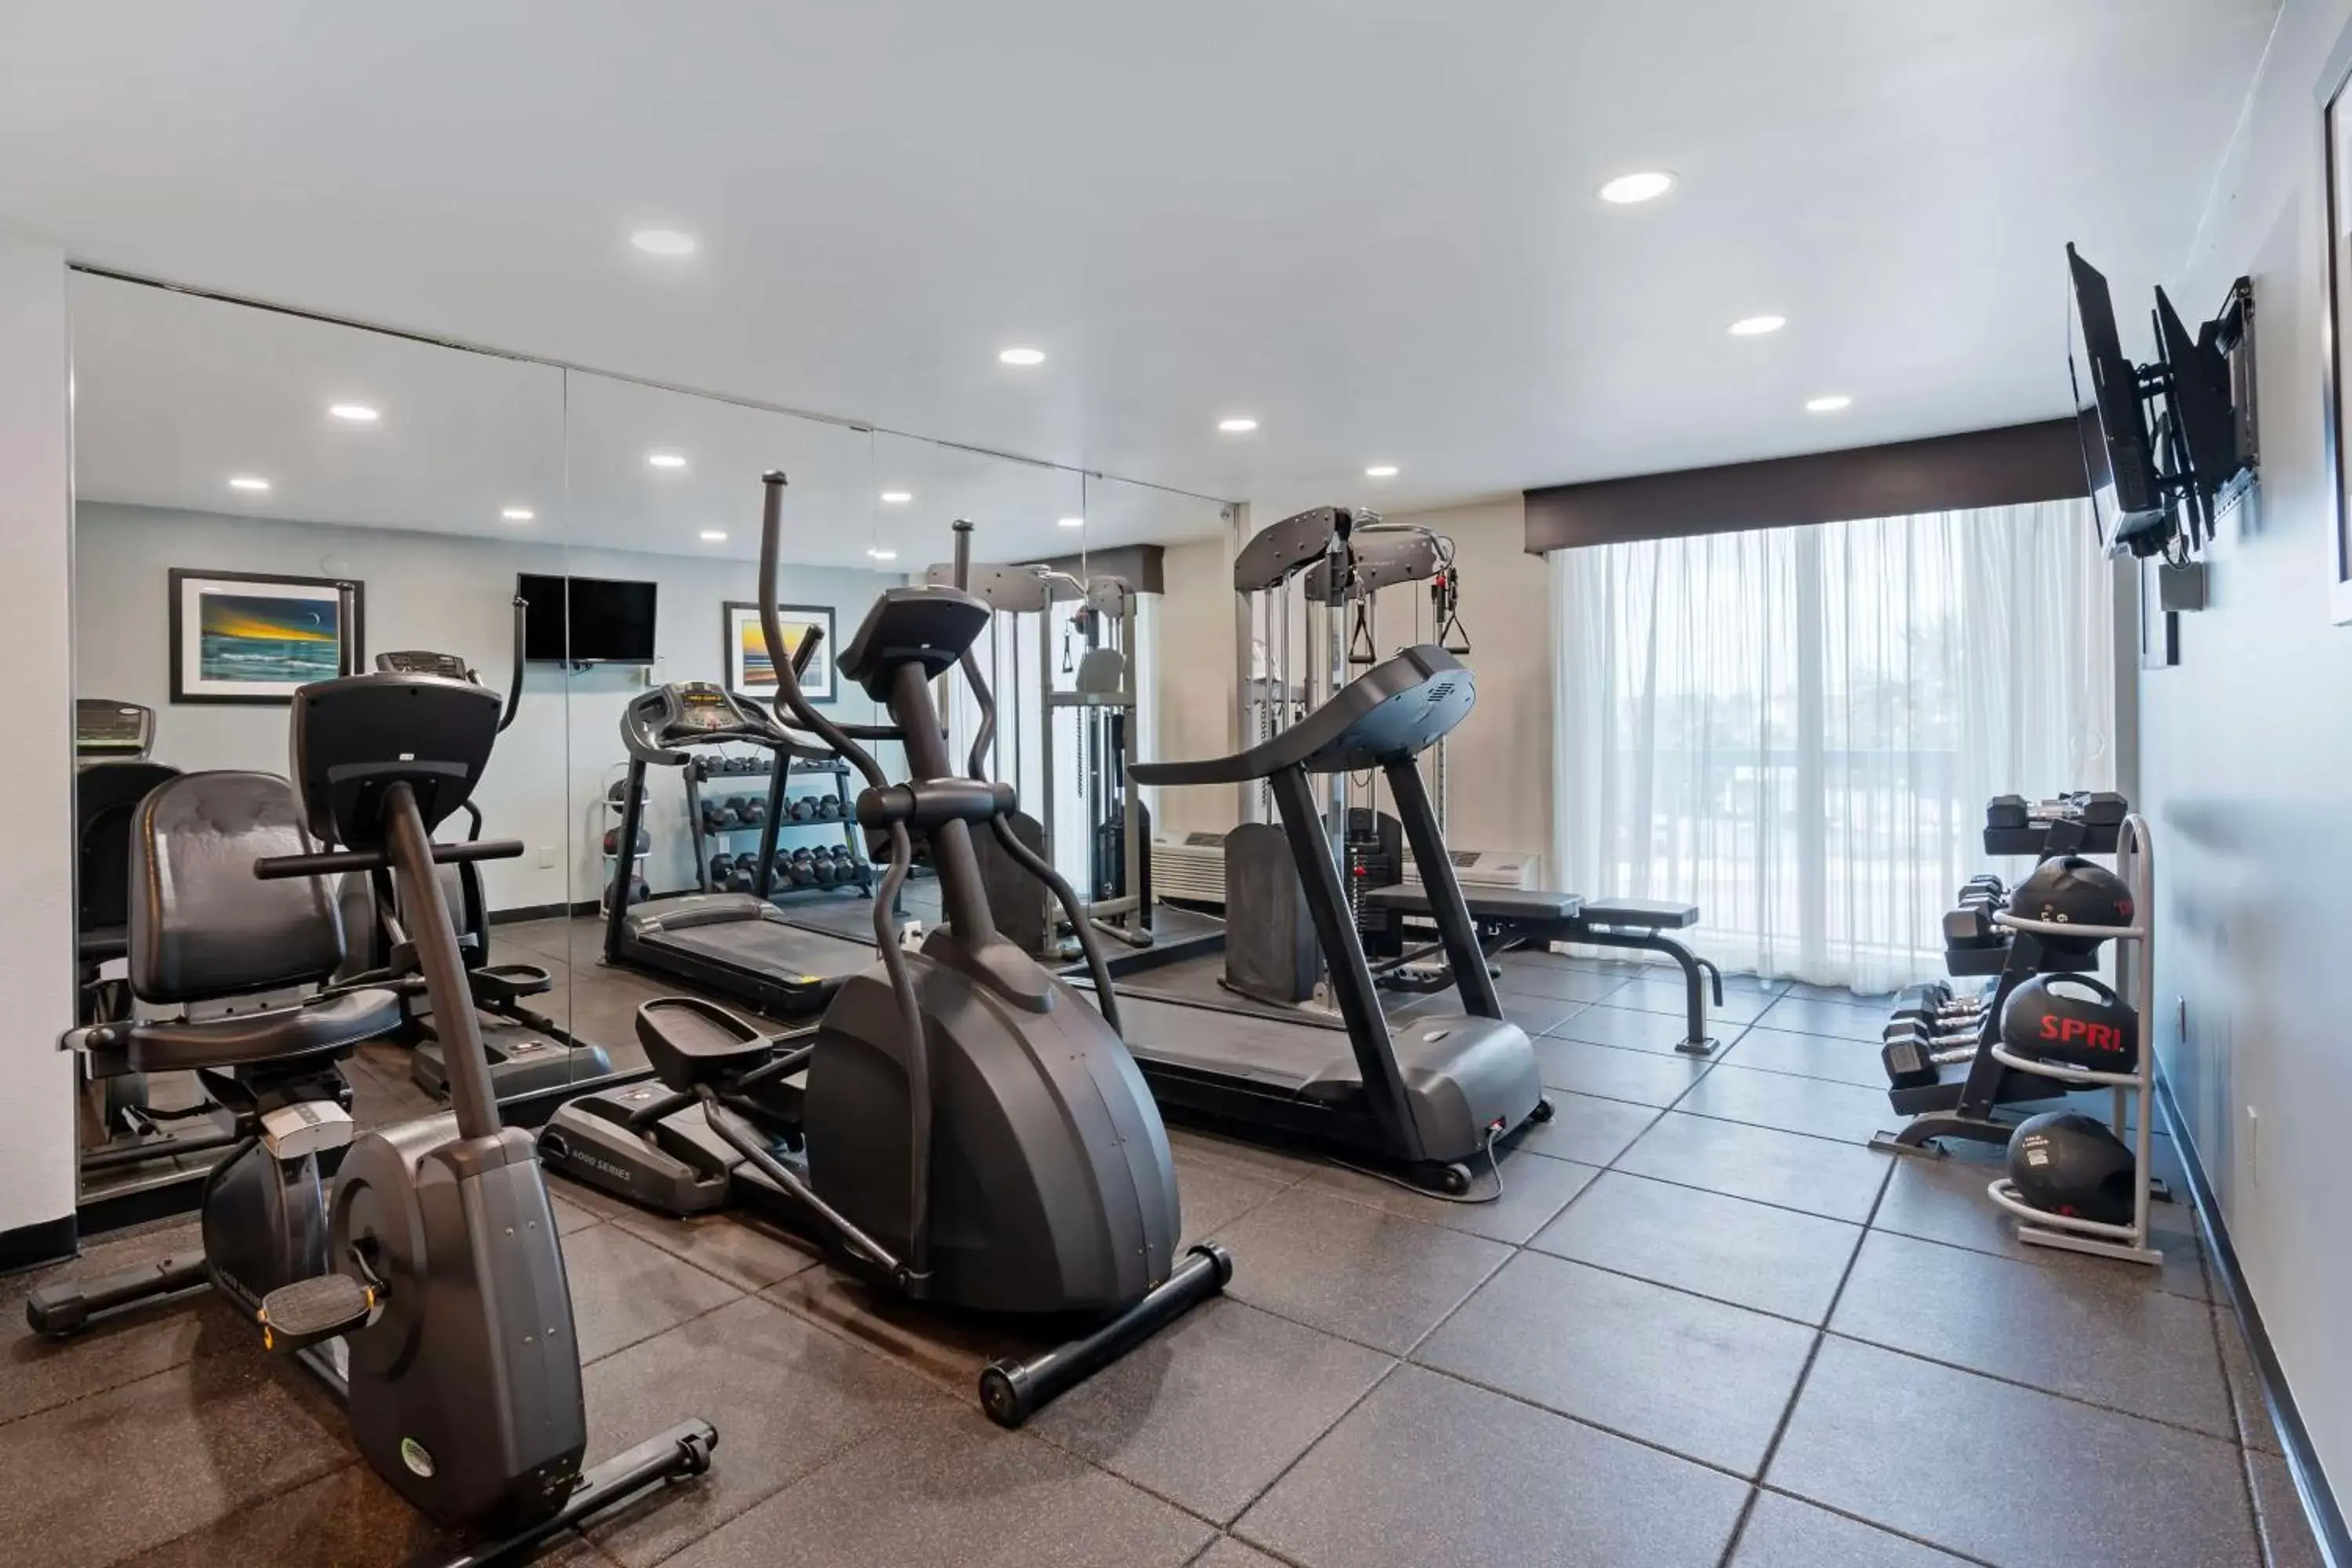 Fitness centre/facilities, Fitness Center/Facilities in Best Western Plus Daytona Inn Seabreeze